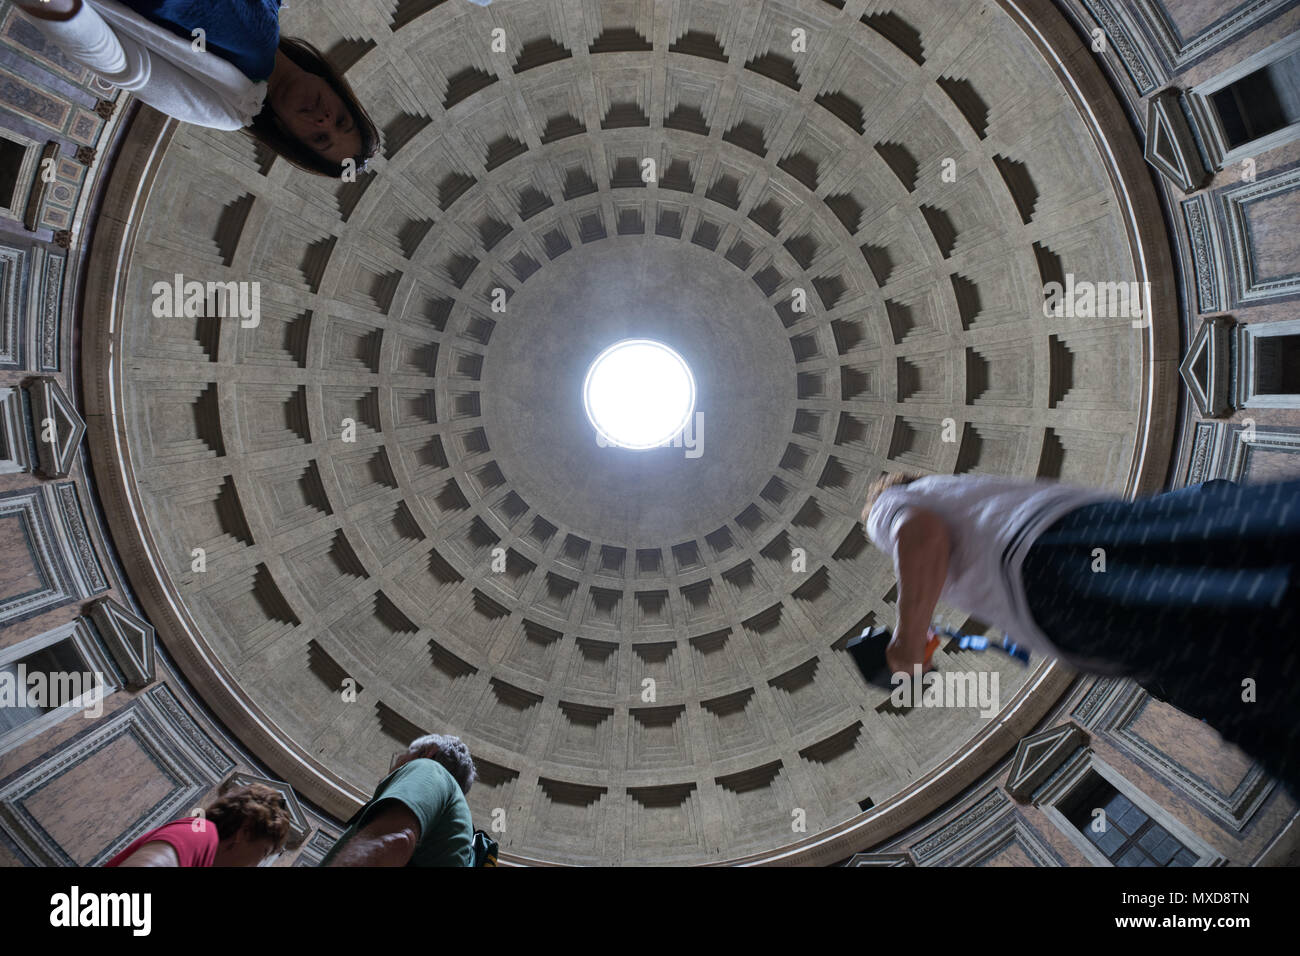 Rome Pantheon interior, light true the hole, tourists visiting Stock Photo